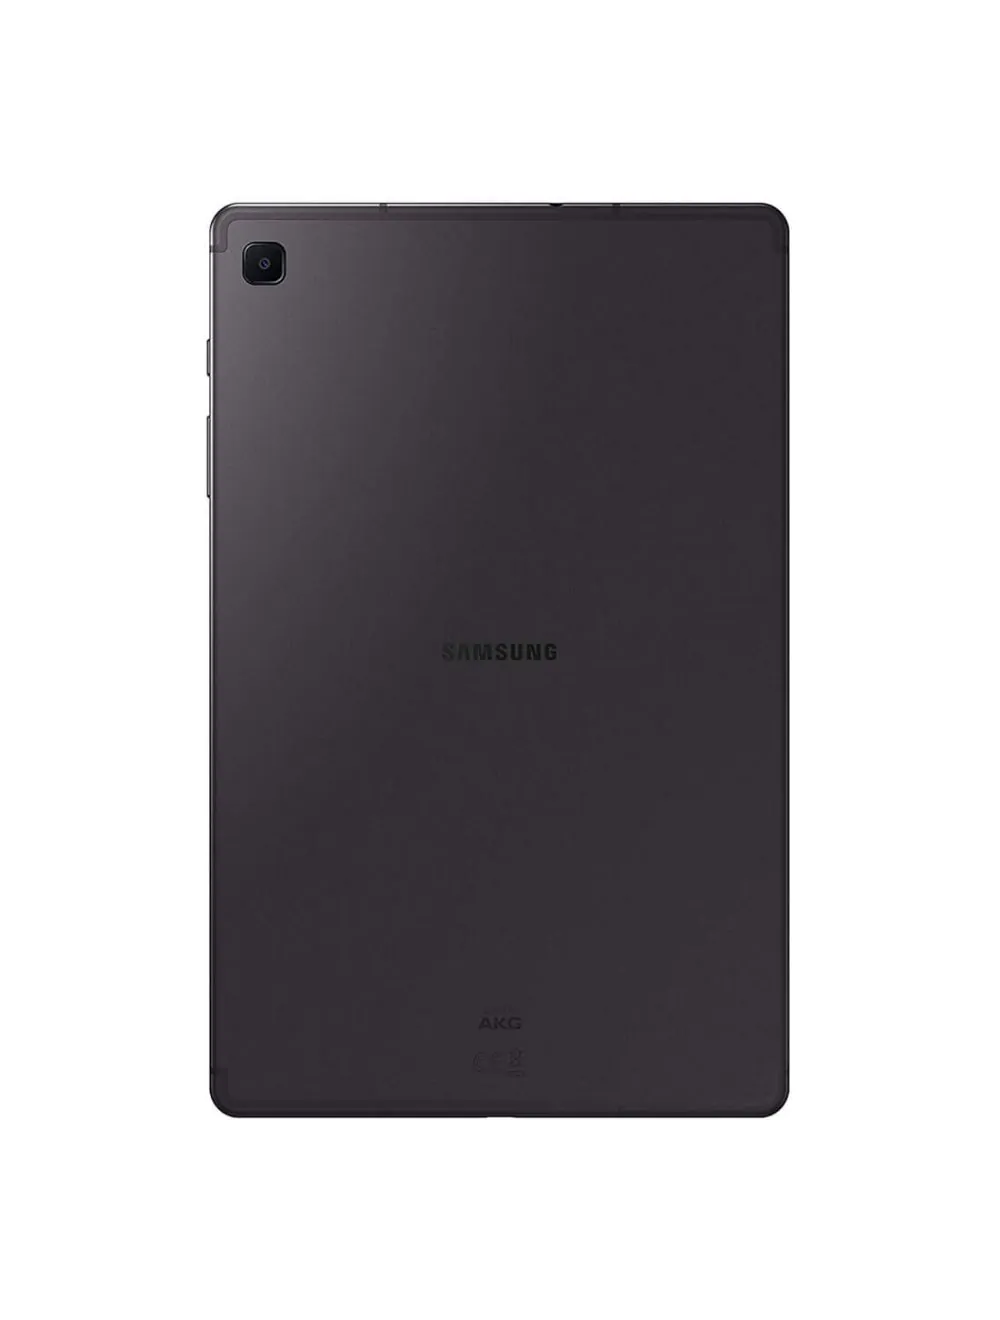 Samsung Galaxy Tab S6 Lite tablet: Samsung Galaxy Tab S6 Lite